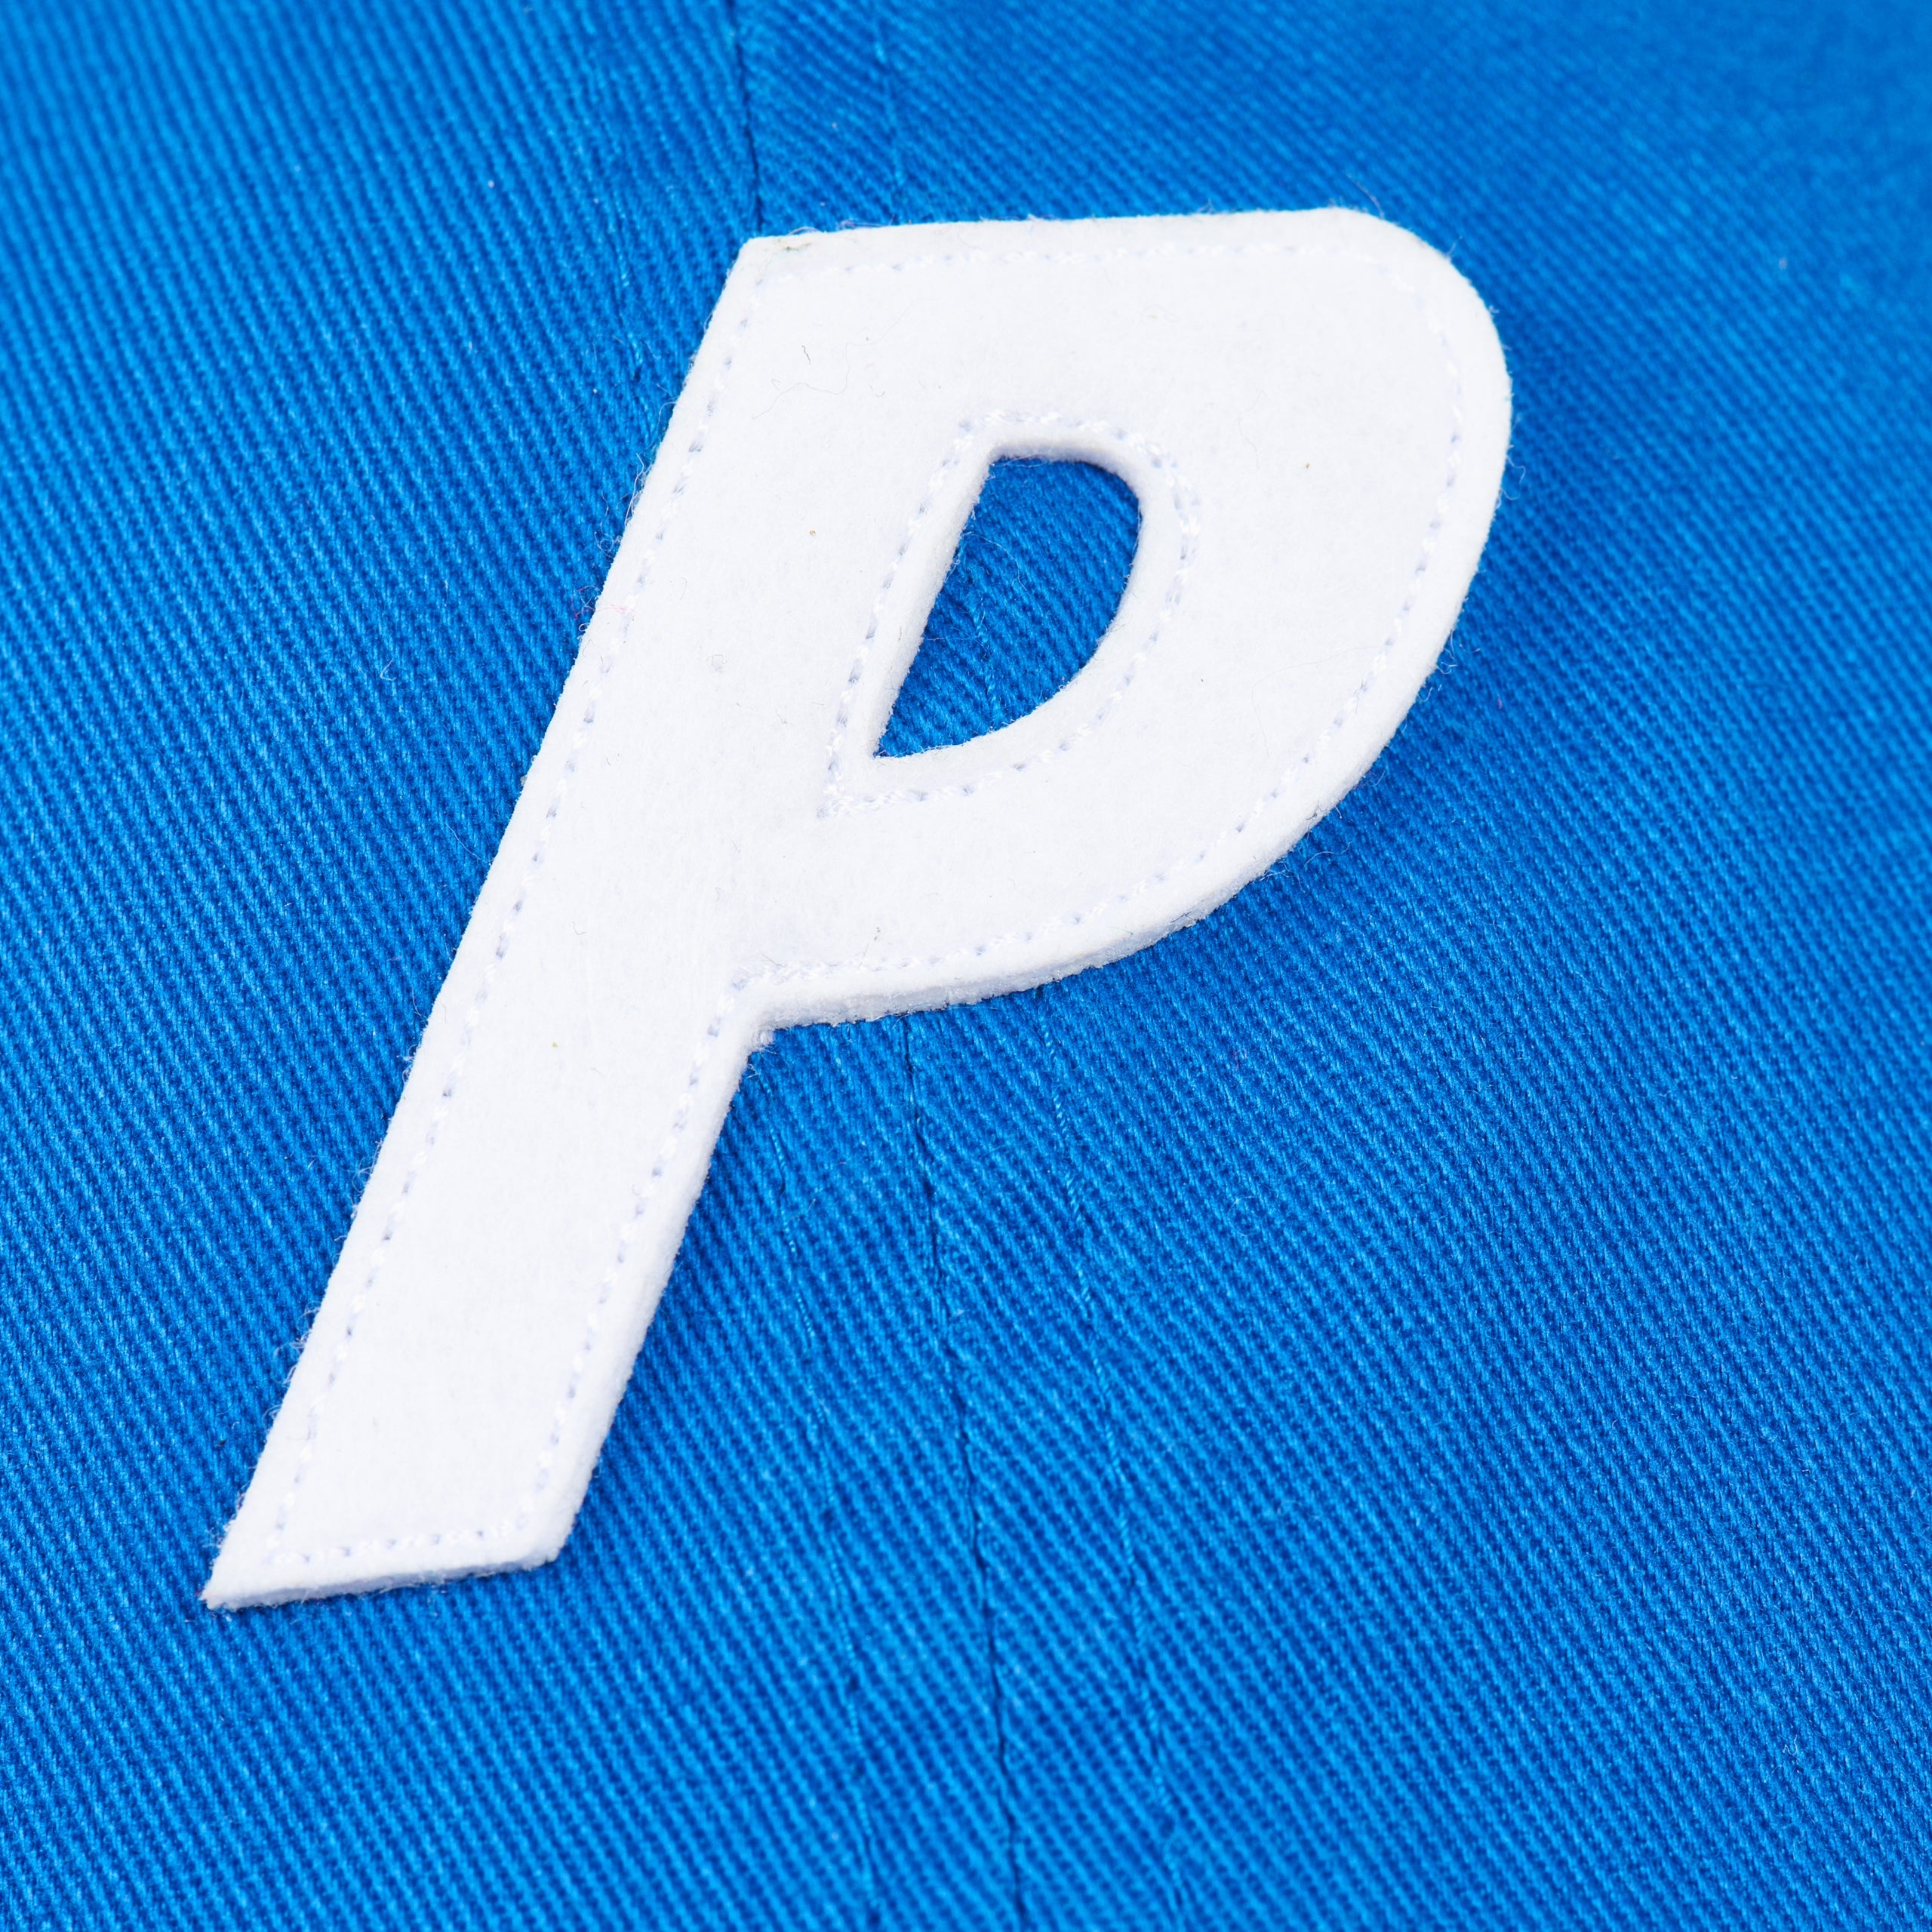 P 6-PANEL PALATIAL BLUE - 3